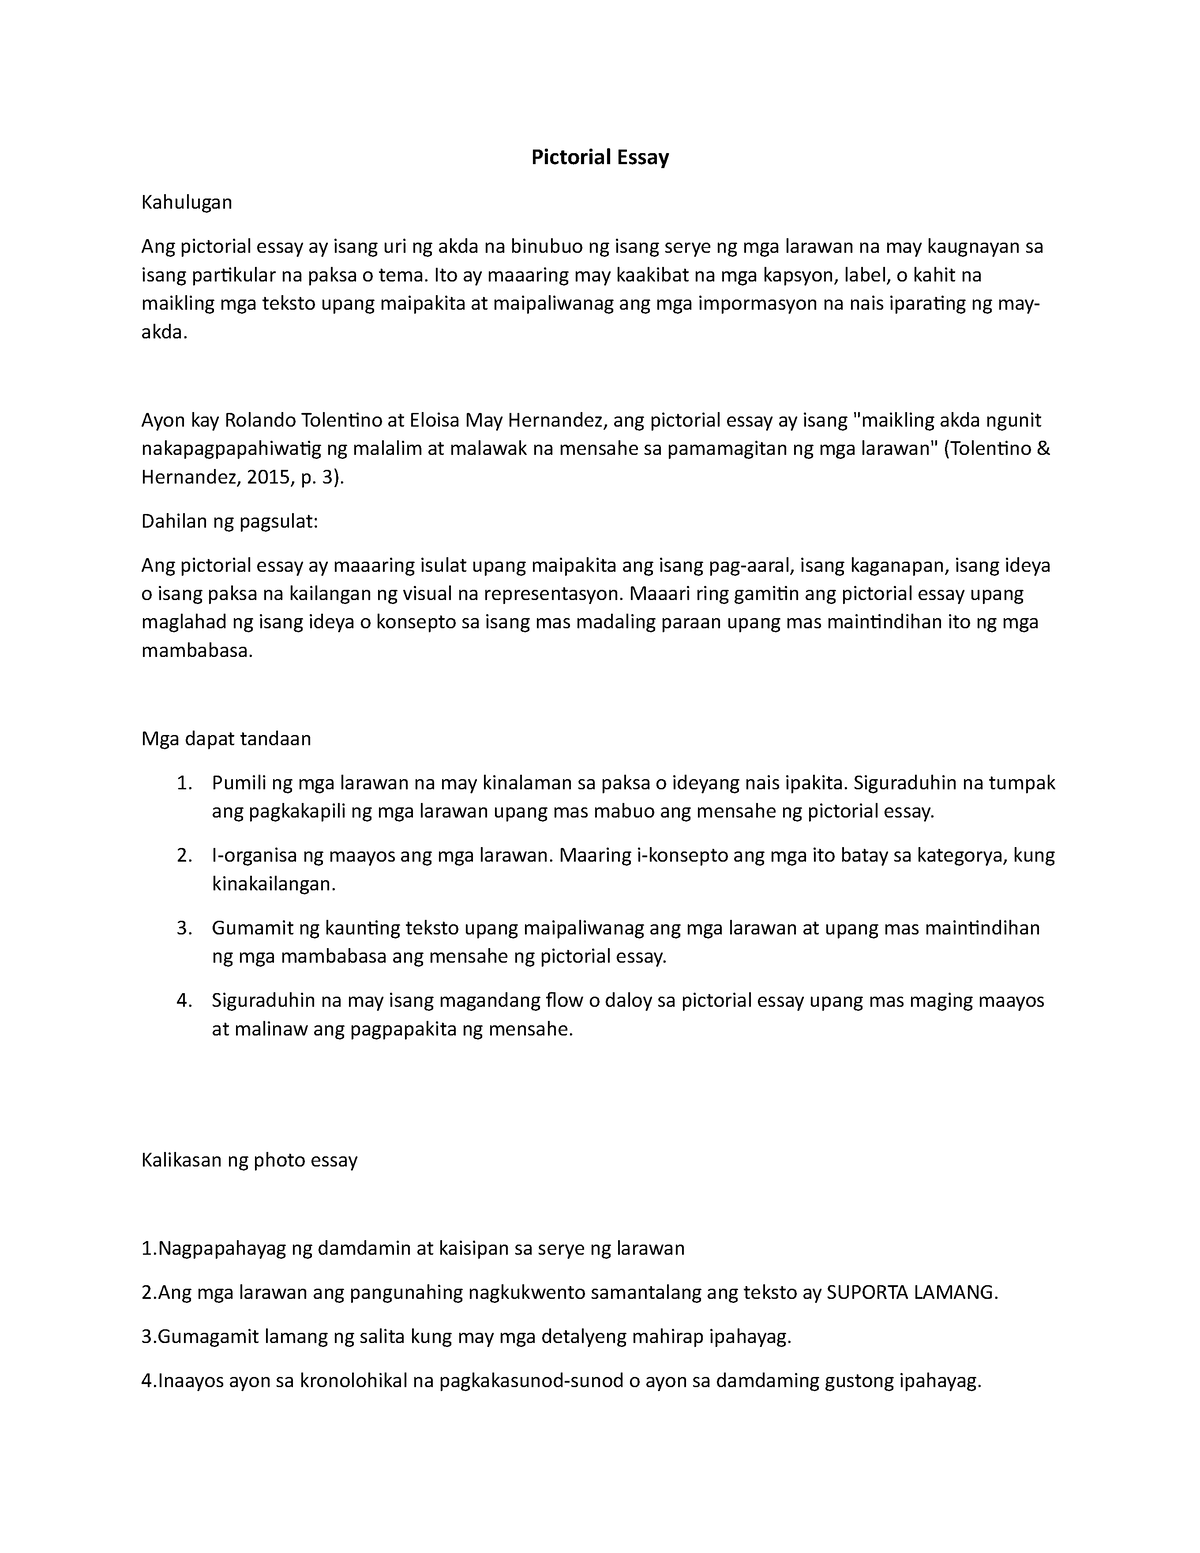 pictorial essay kahulugan pdf